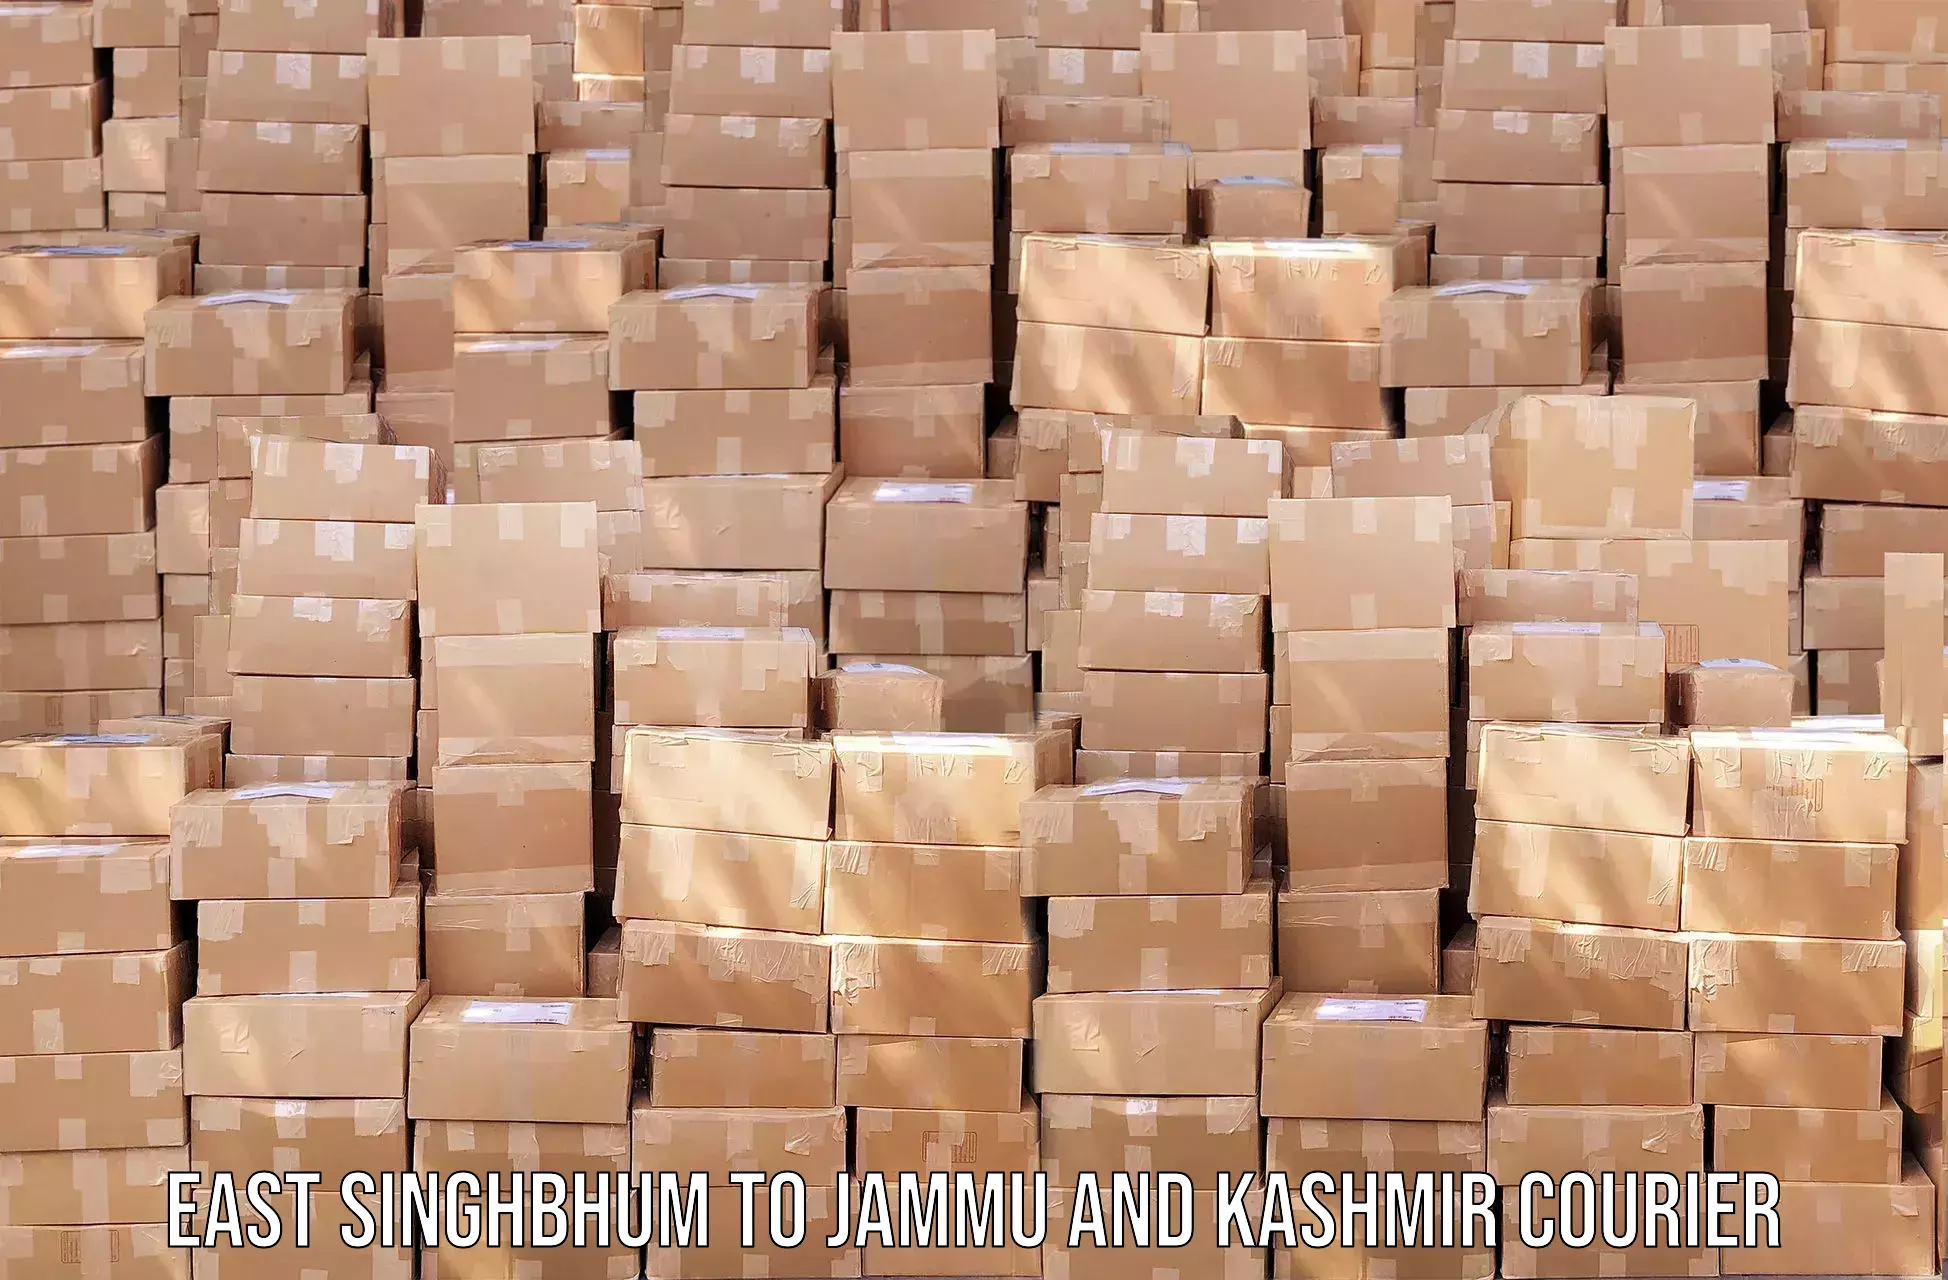 Courier membership East Singhbhum to Srinagar Kashmir